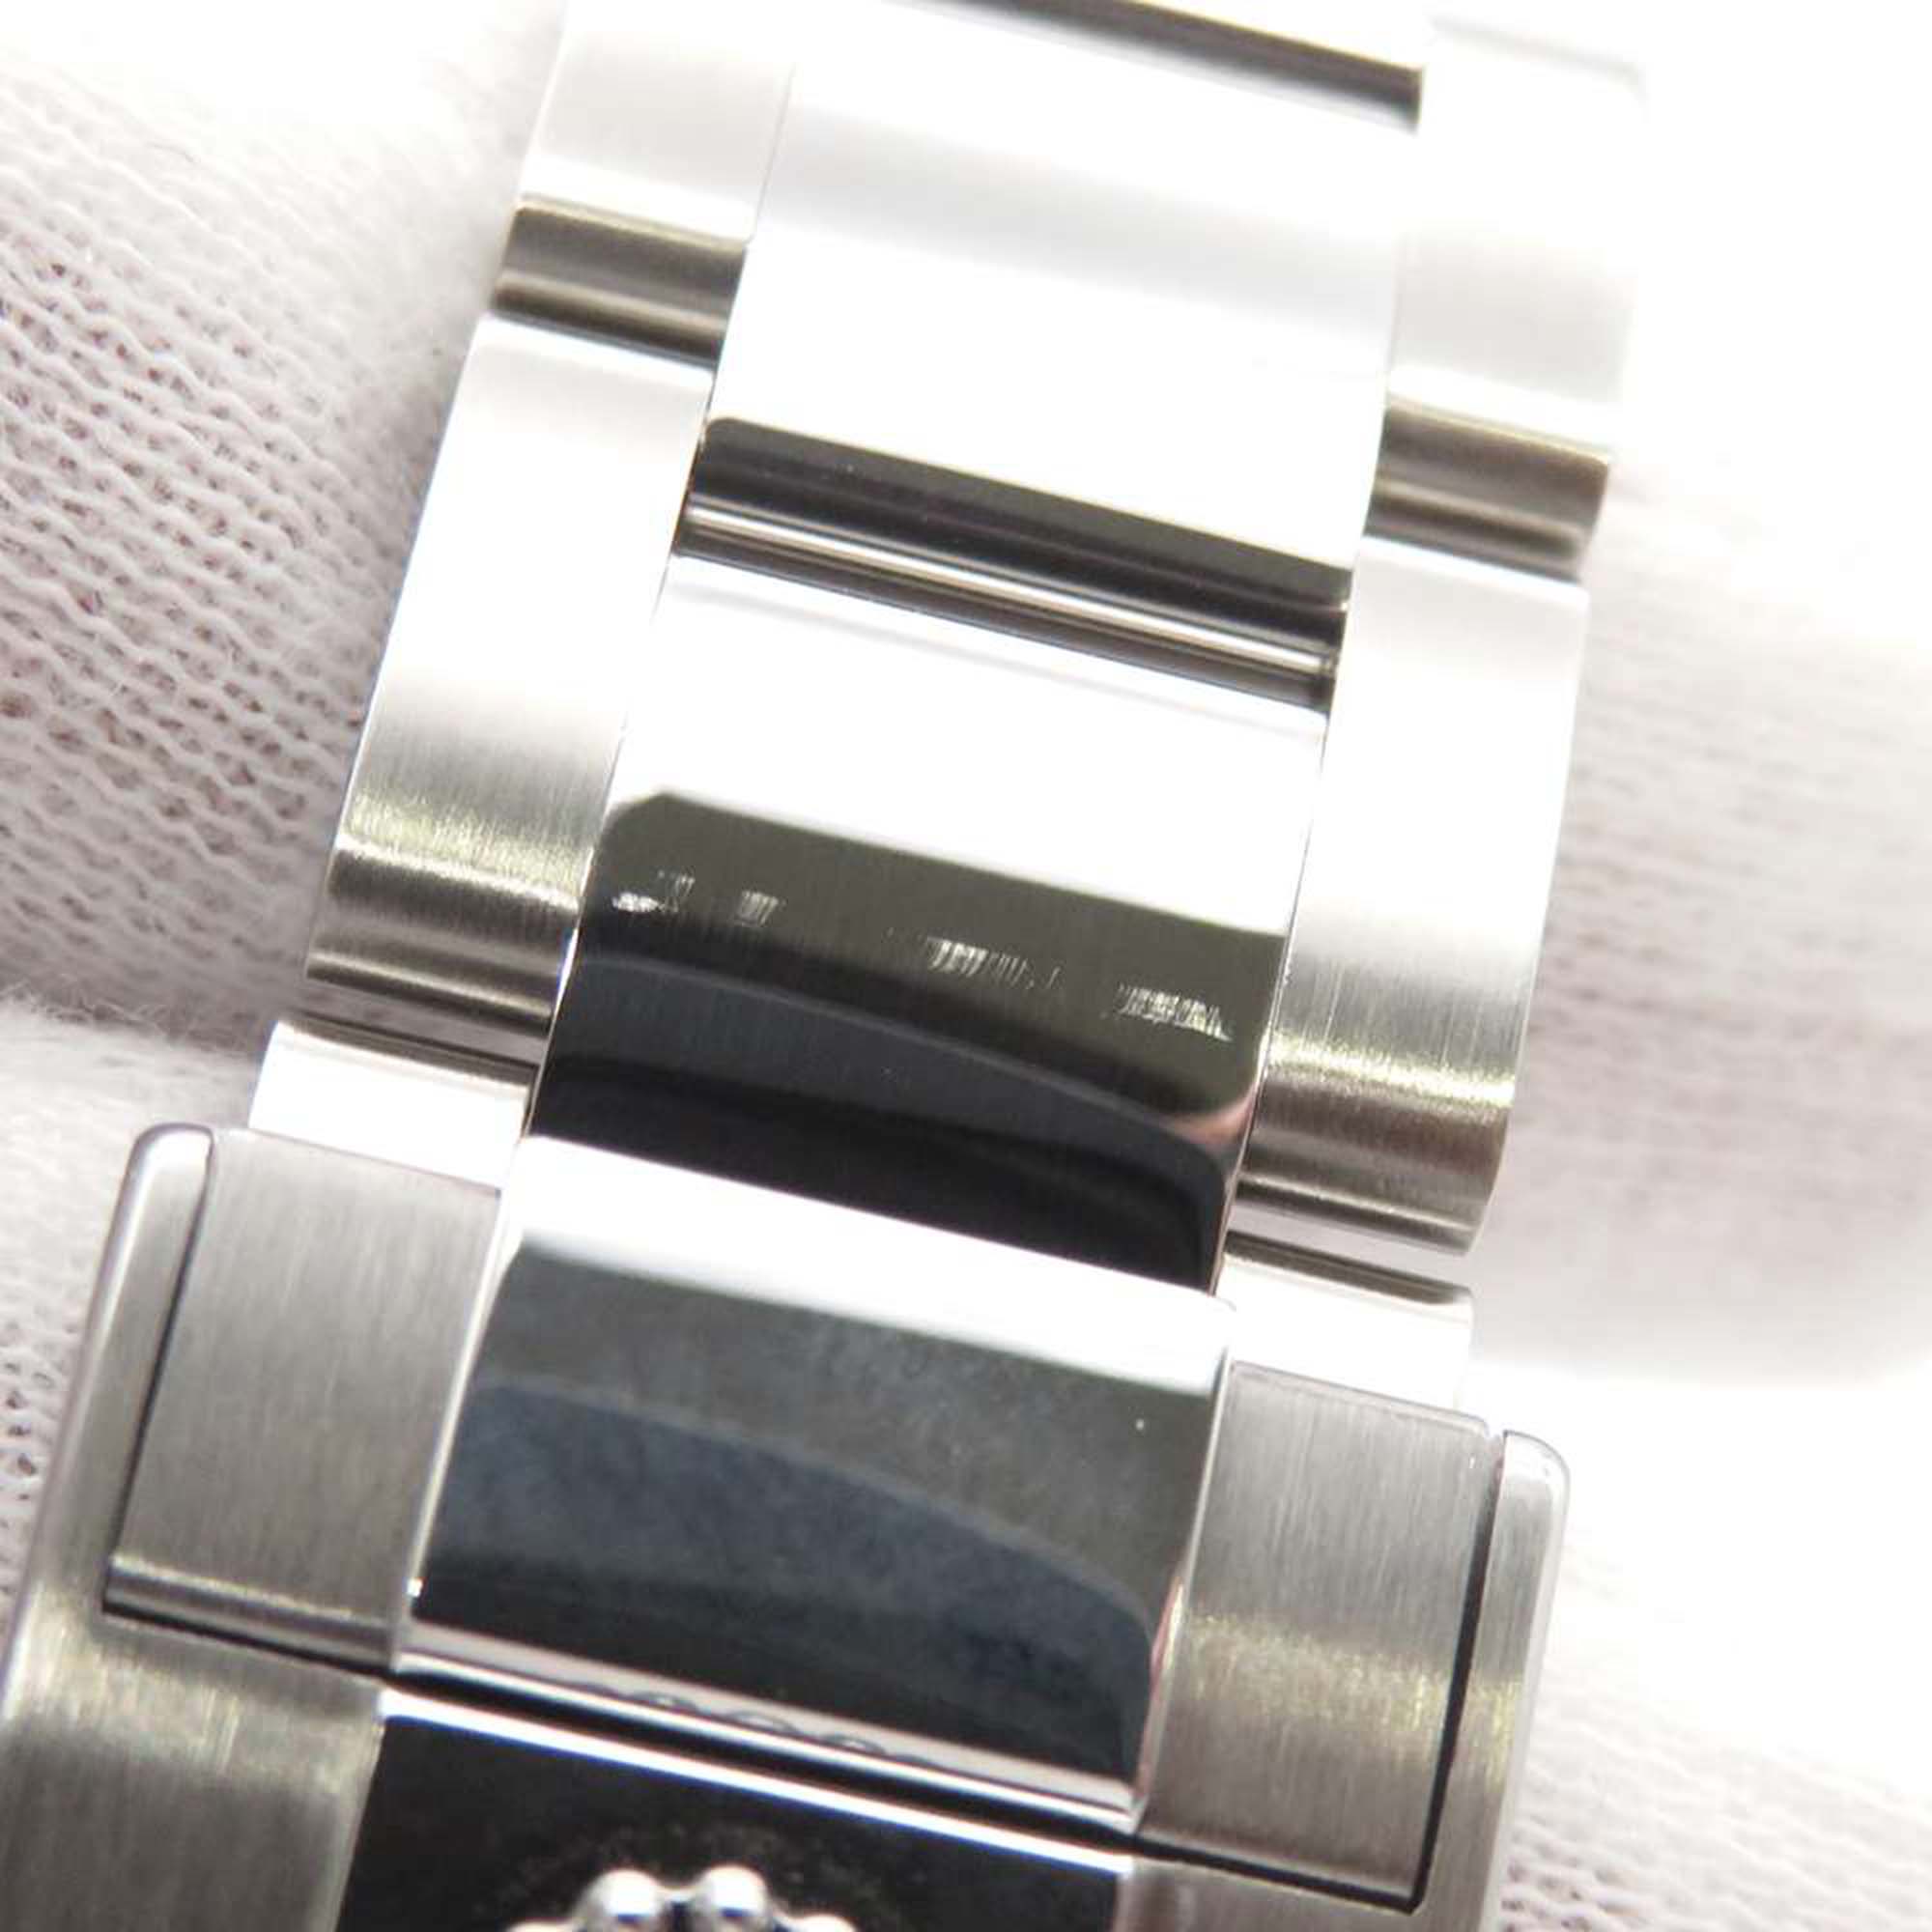 Rolex Black Stainless Steel GMT-Master II 126710BLRO Automatic Men's Wristwatch 40 Mm